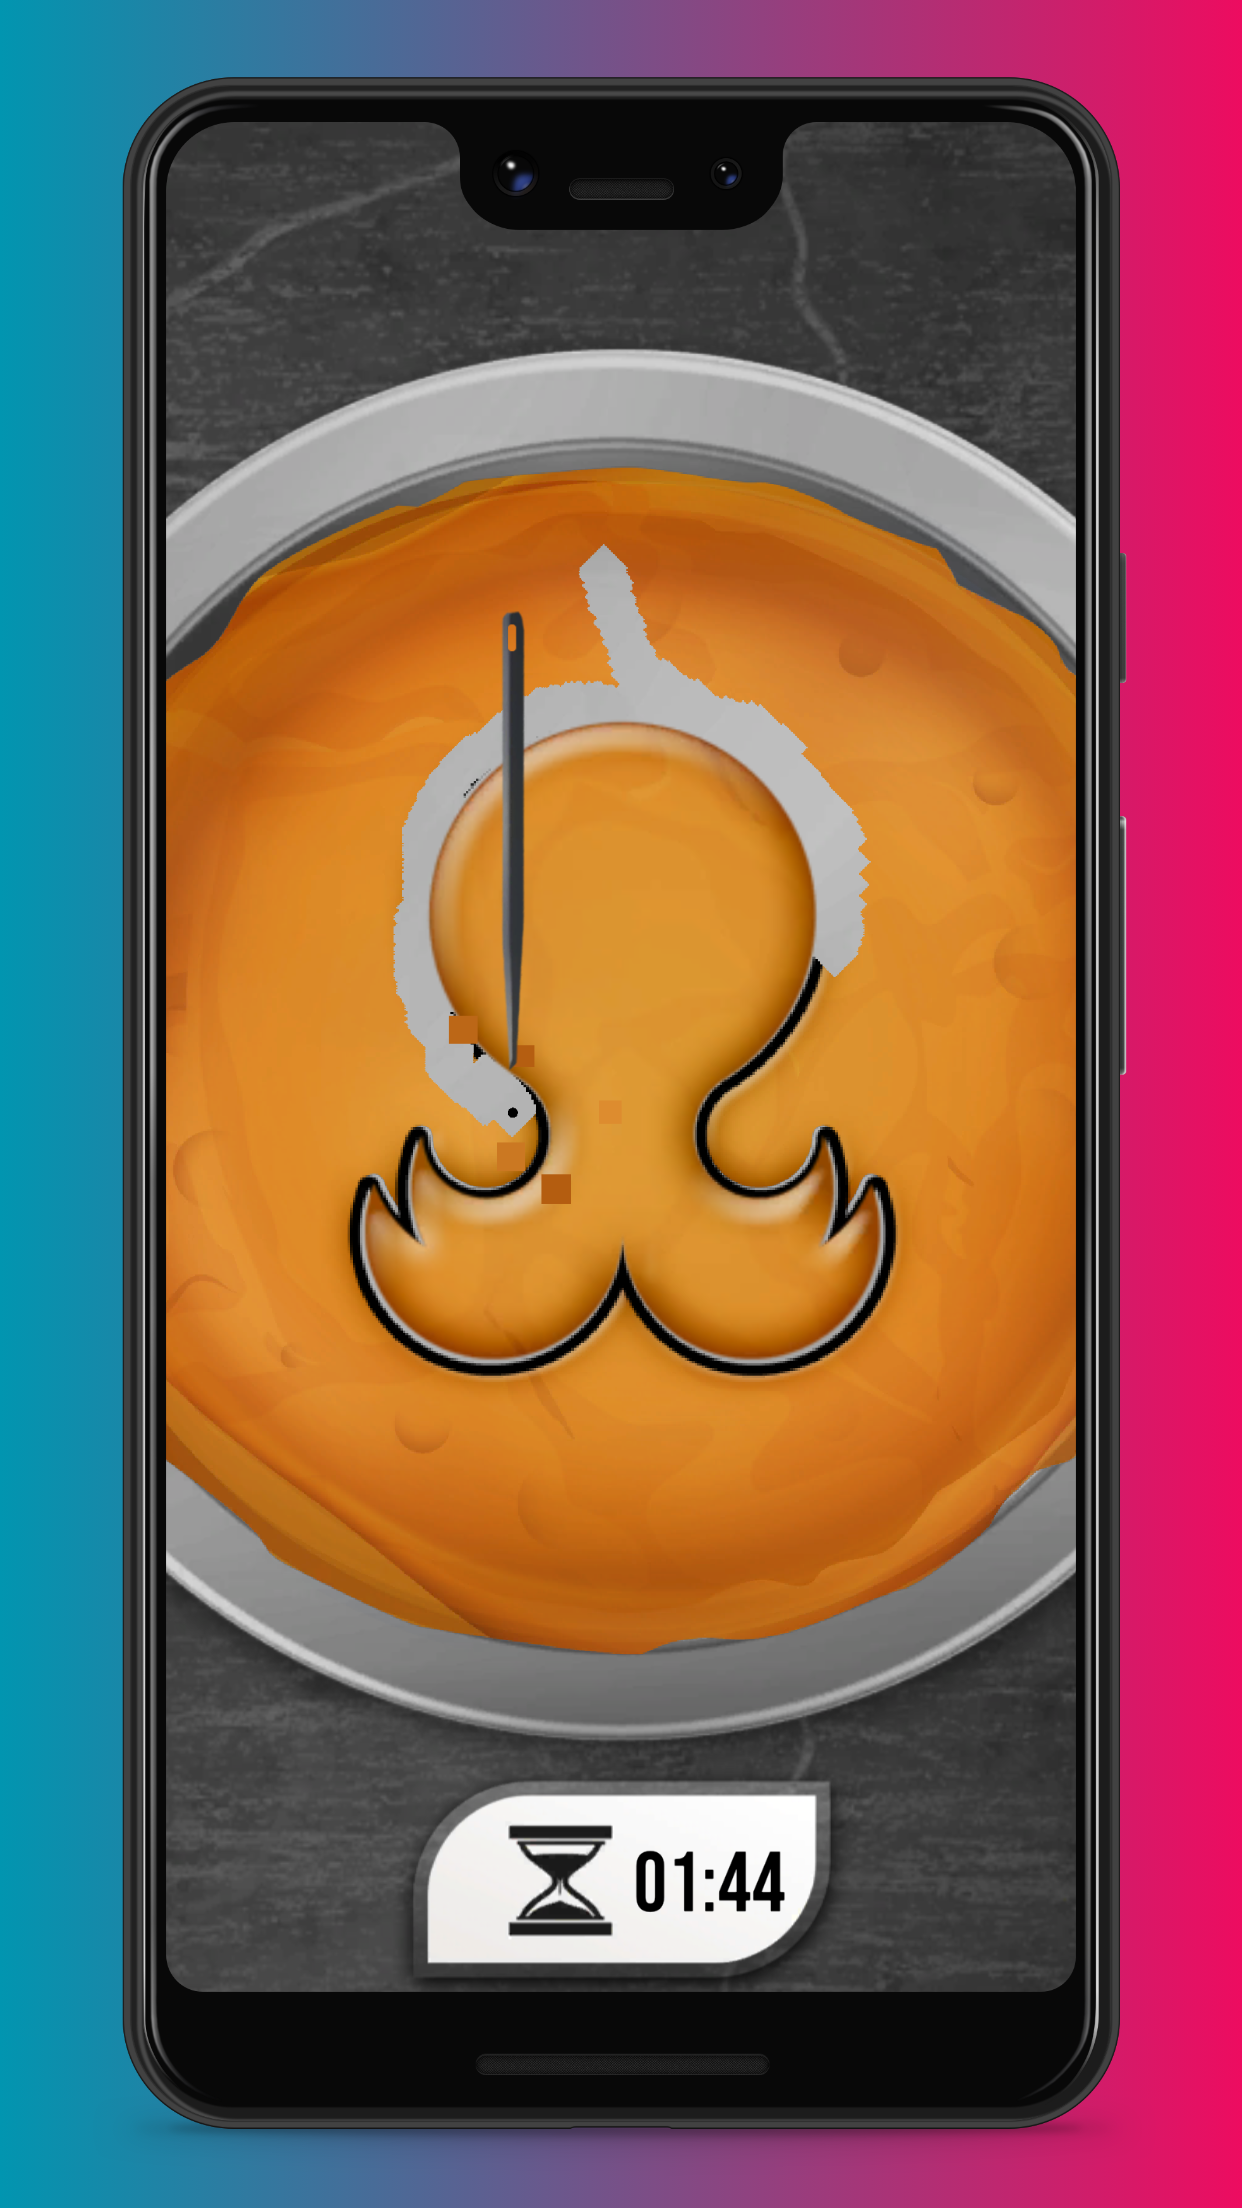 Sugar Honeycomb Squid Game screenshot game